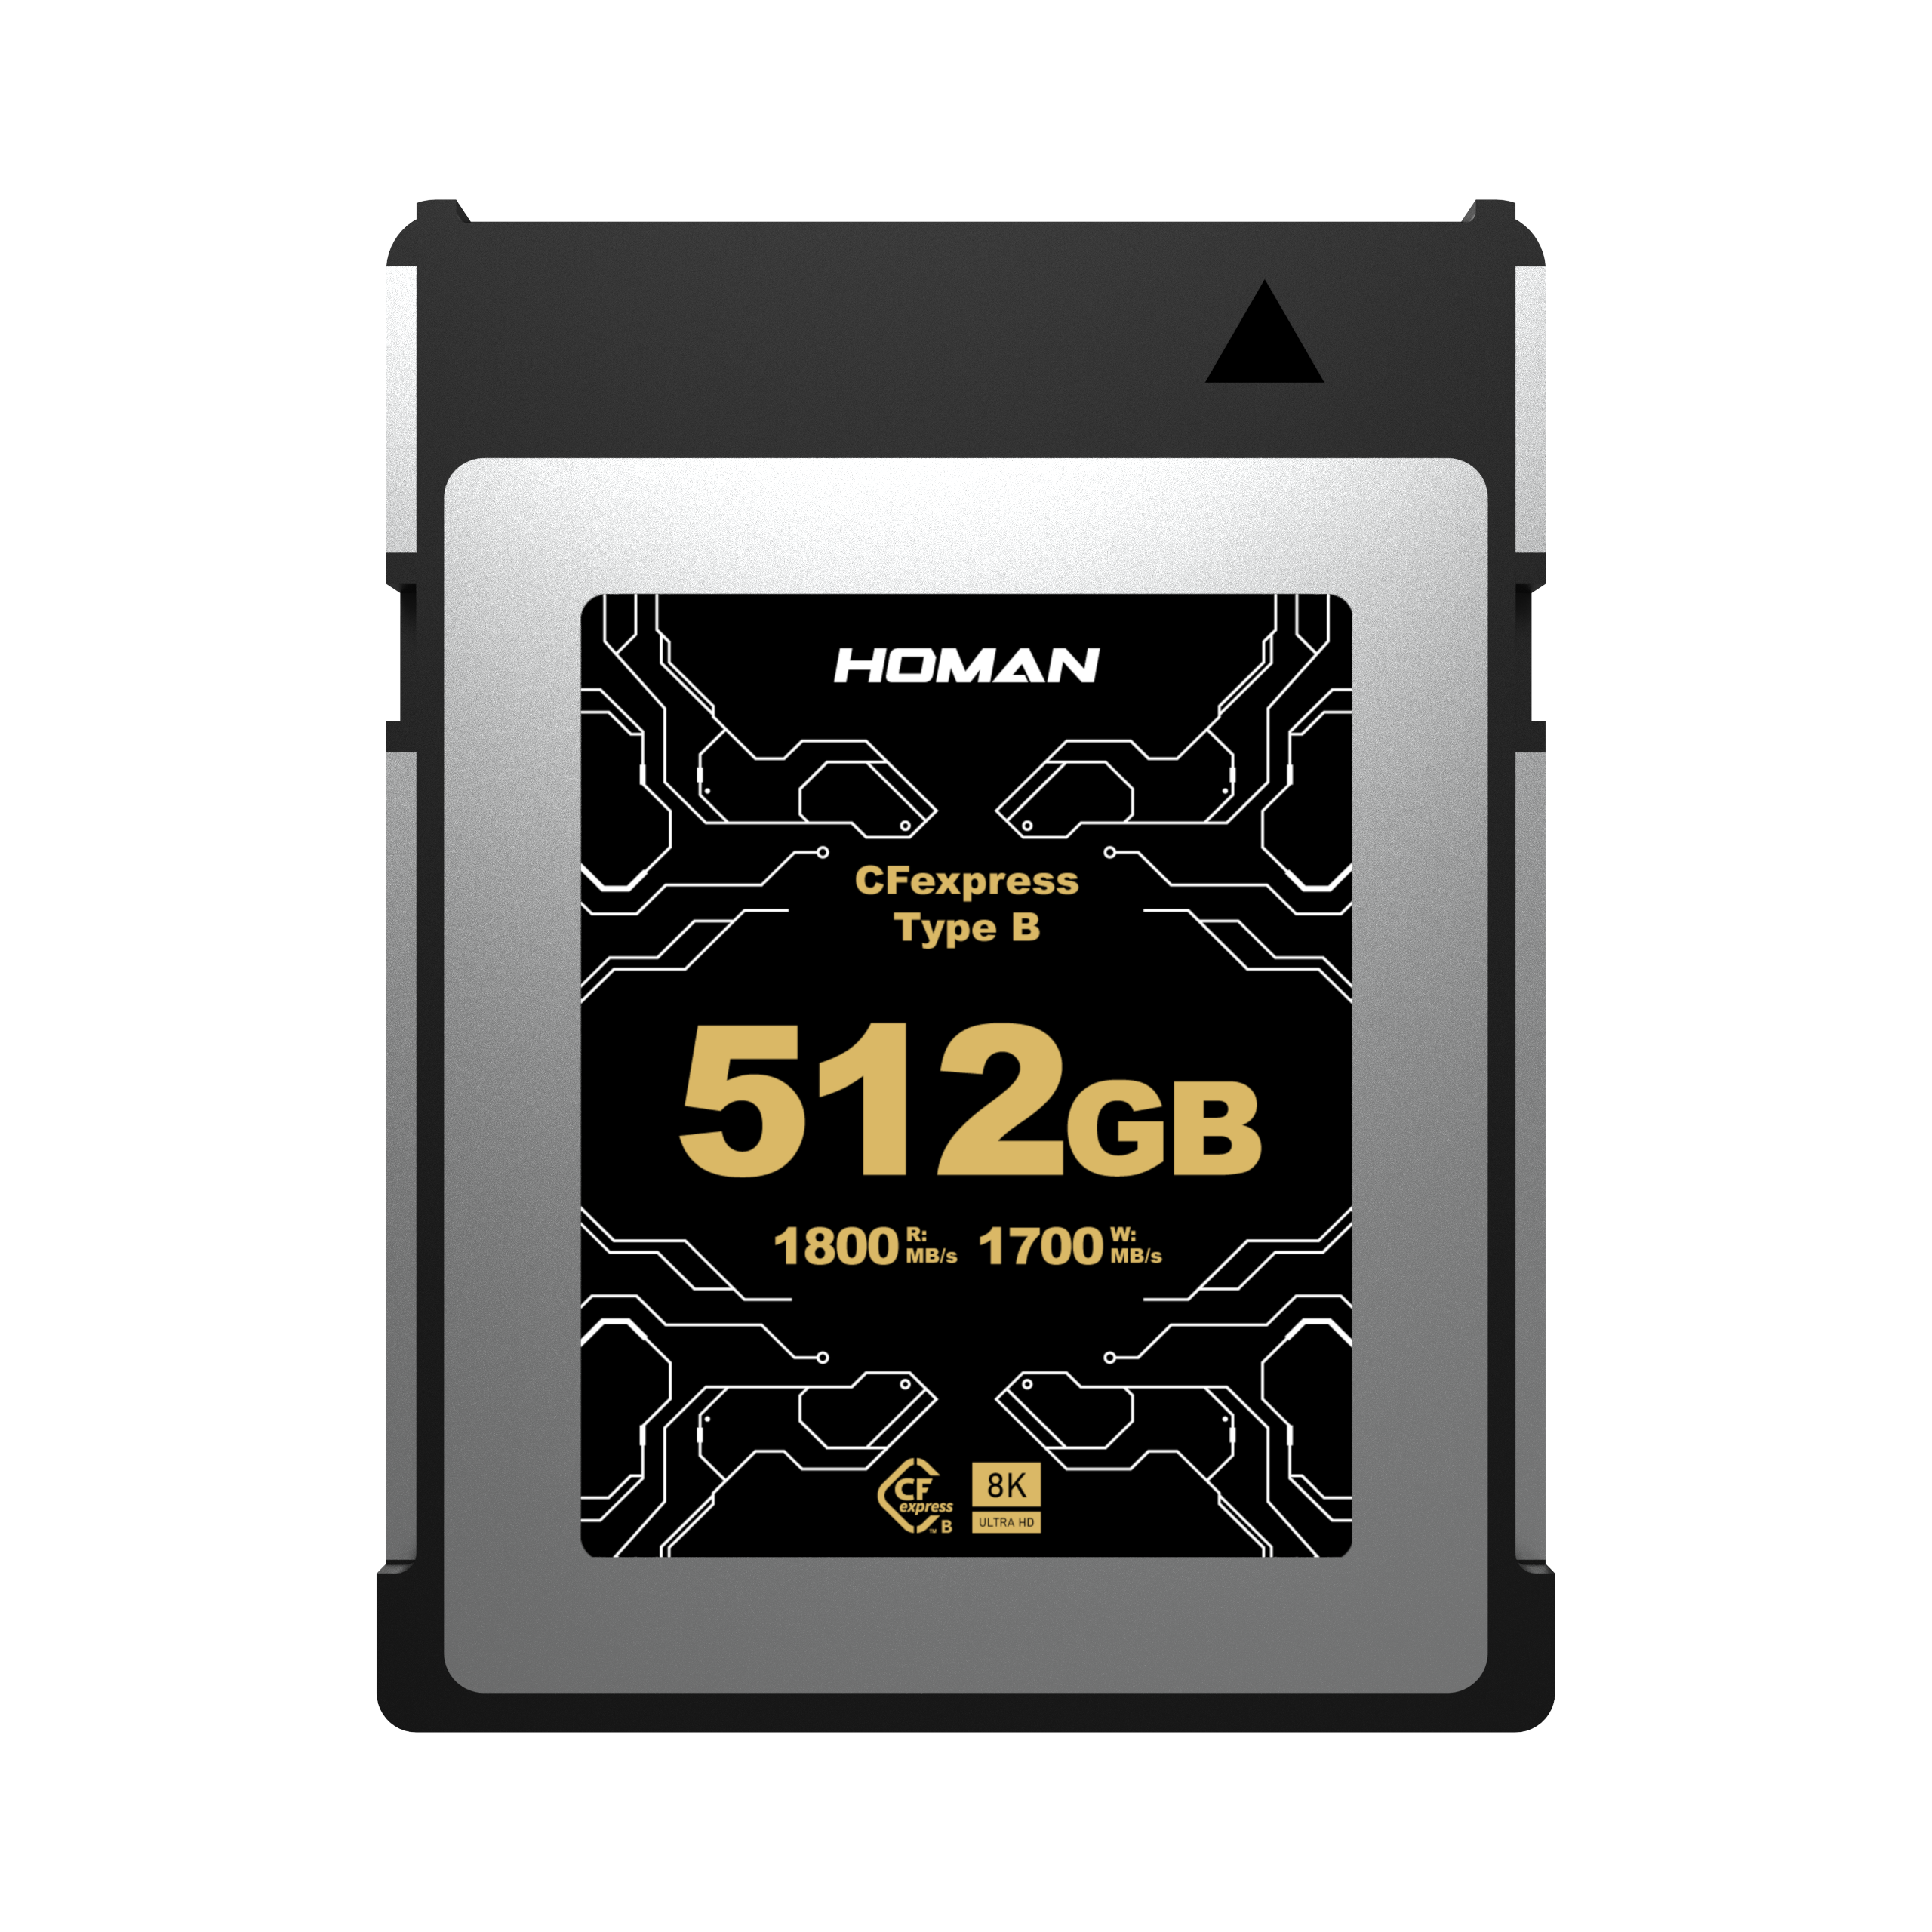 HOMAN CFexpress Card Type B 512GB